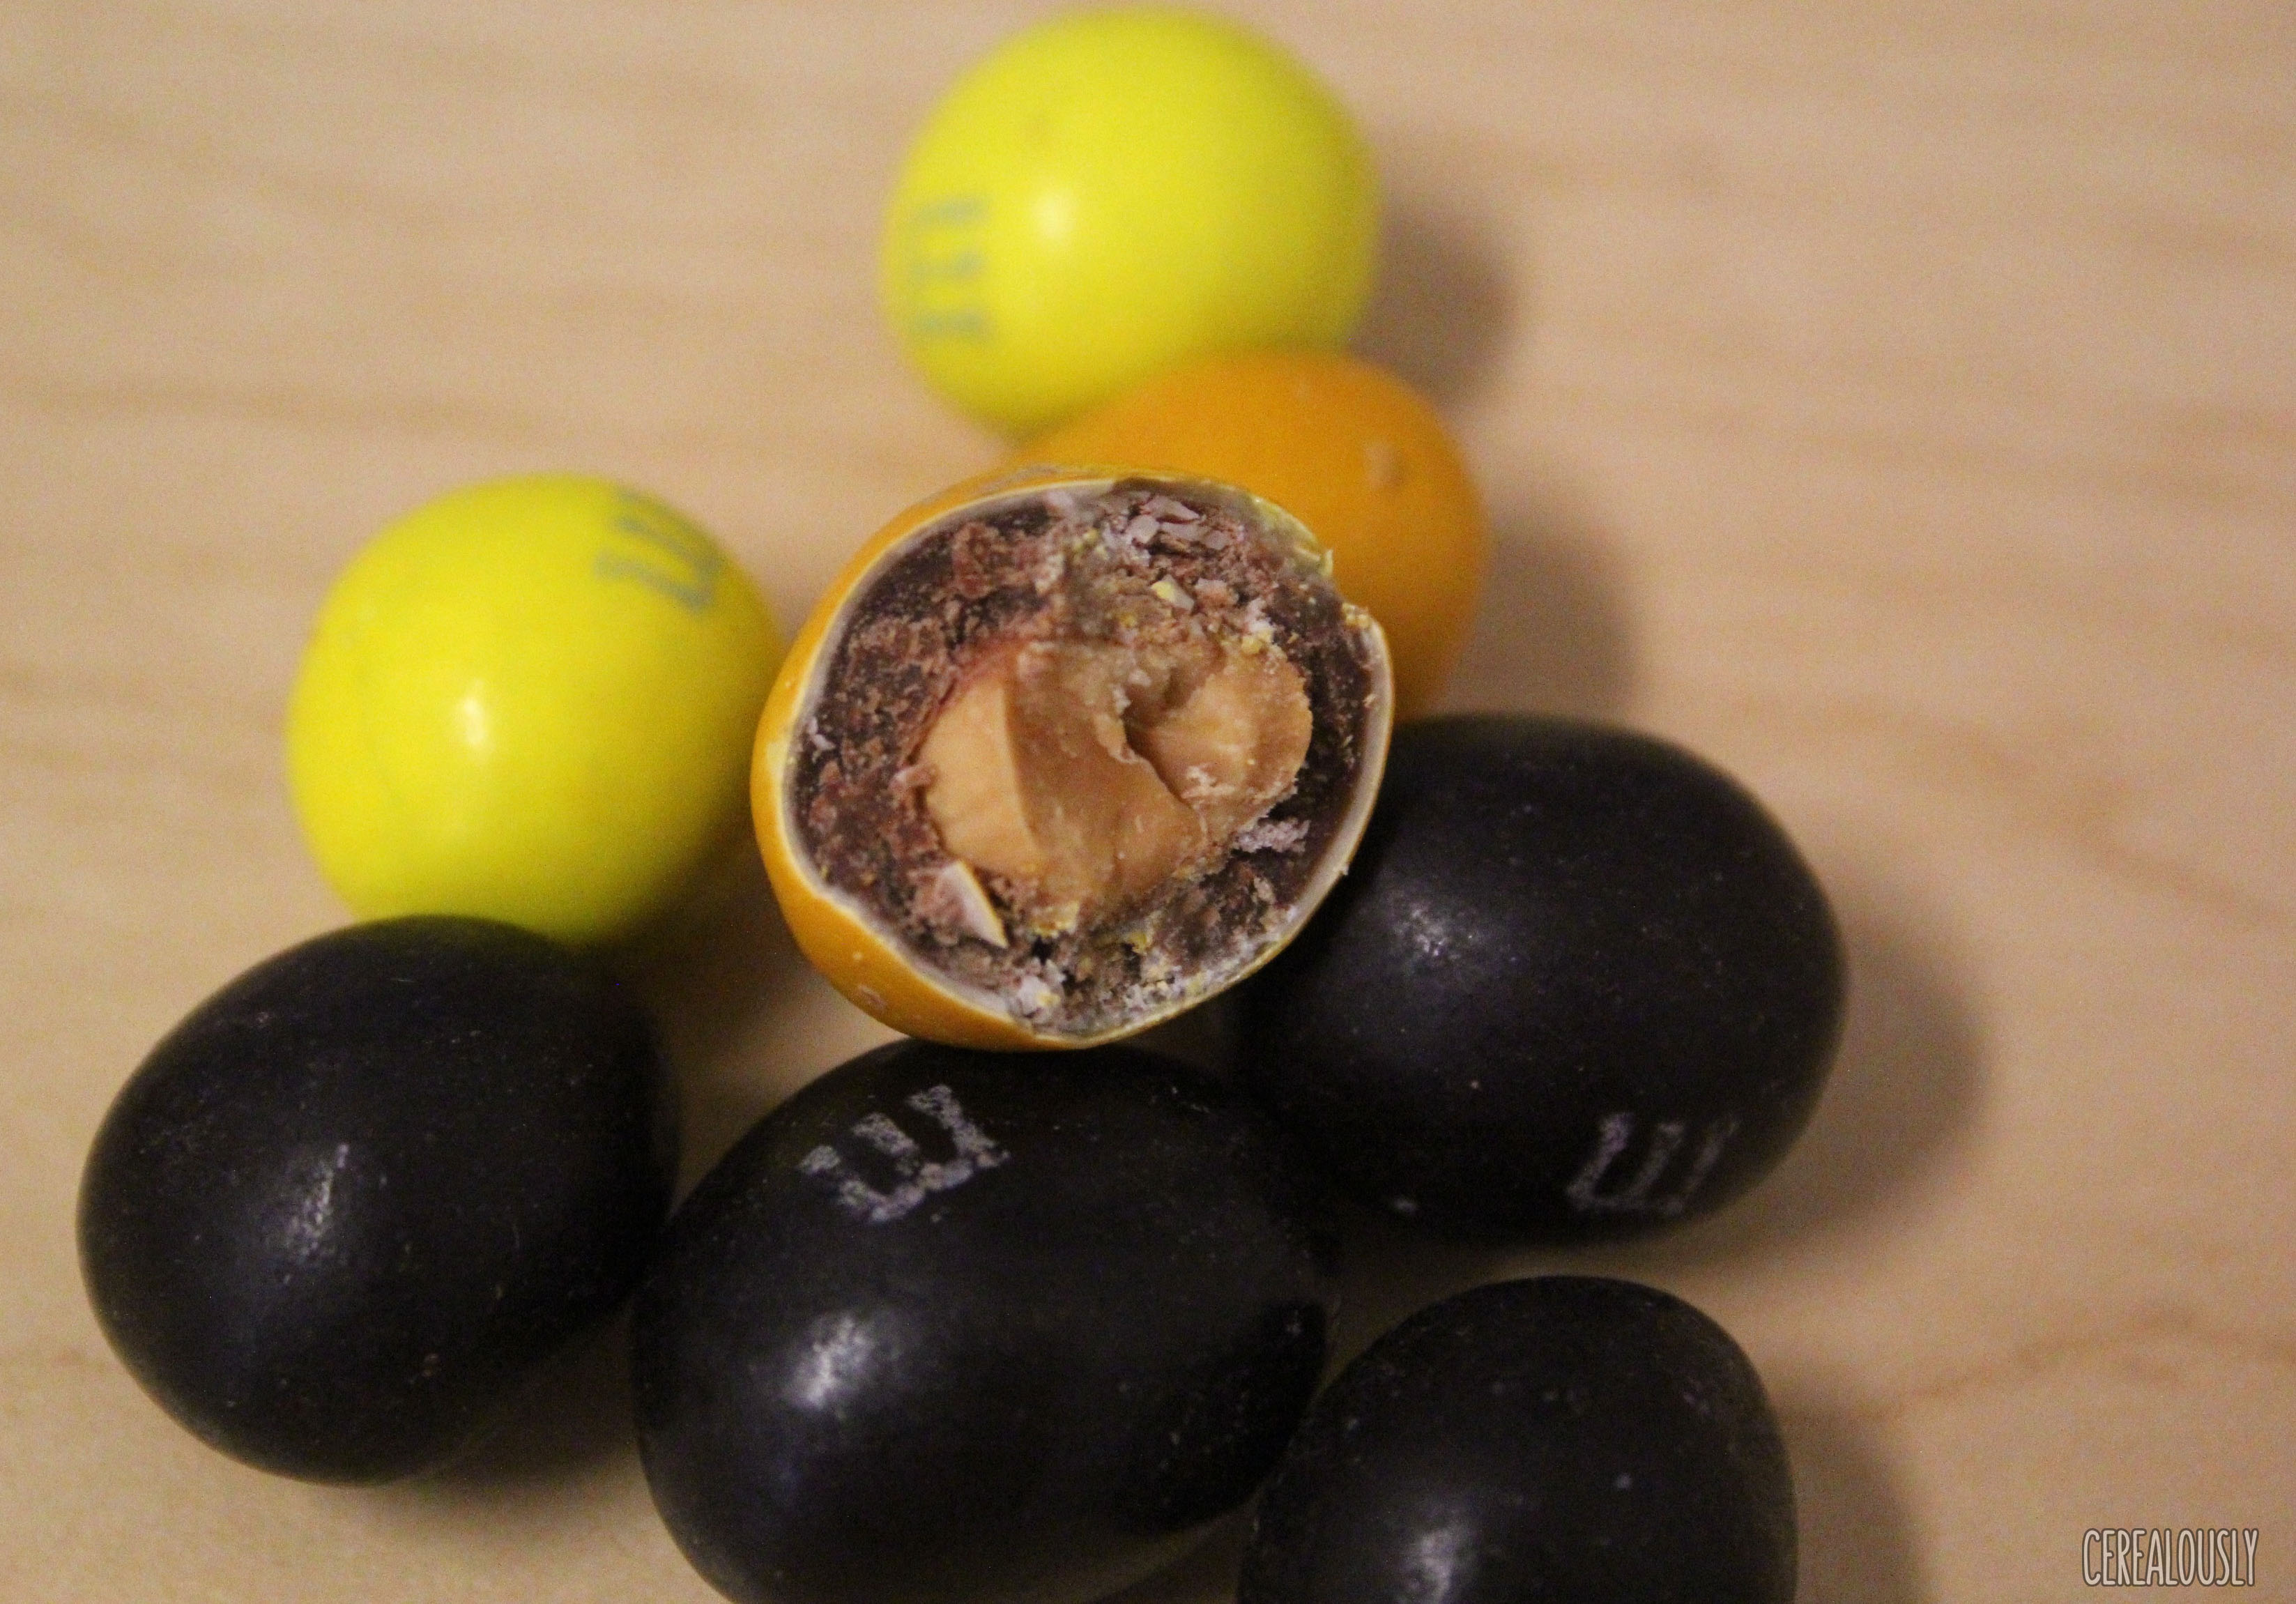 M&M's: Coffee Nut, Chili Nut & Honey Nut Review 